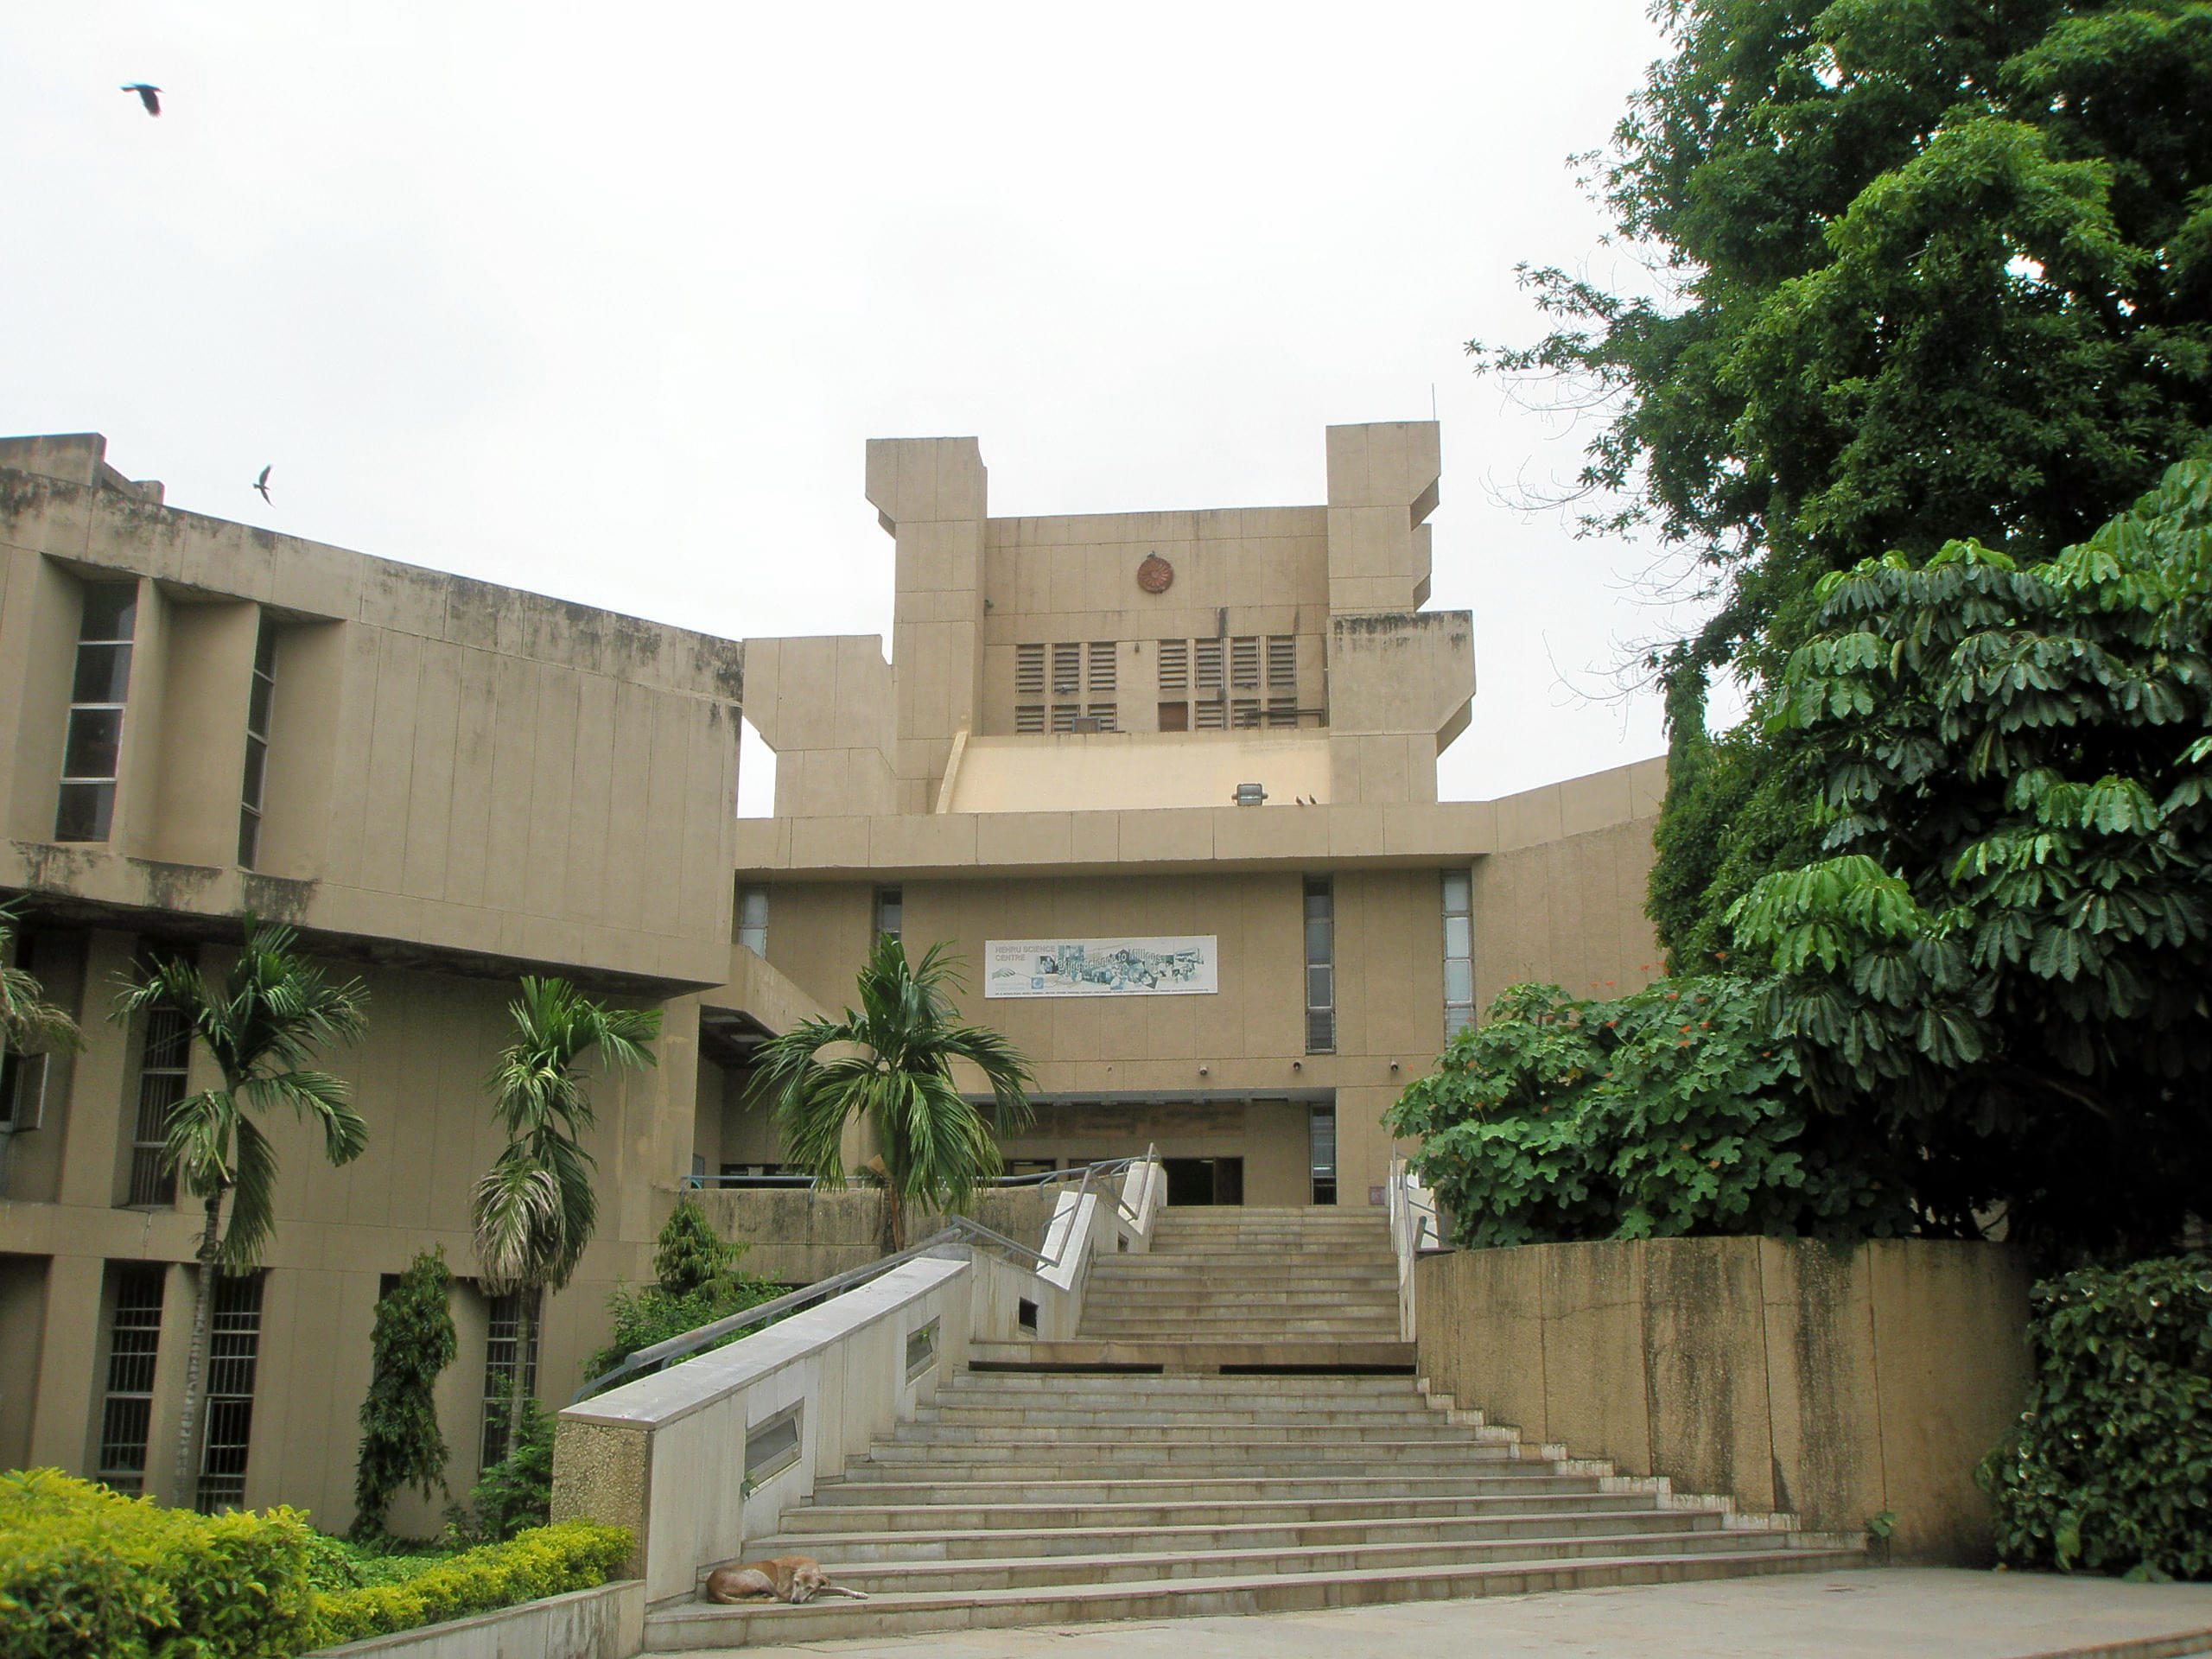 Nehru Science Centre Overview